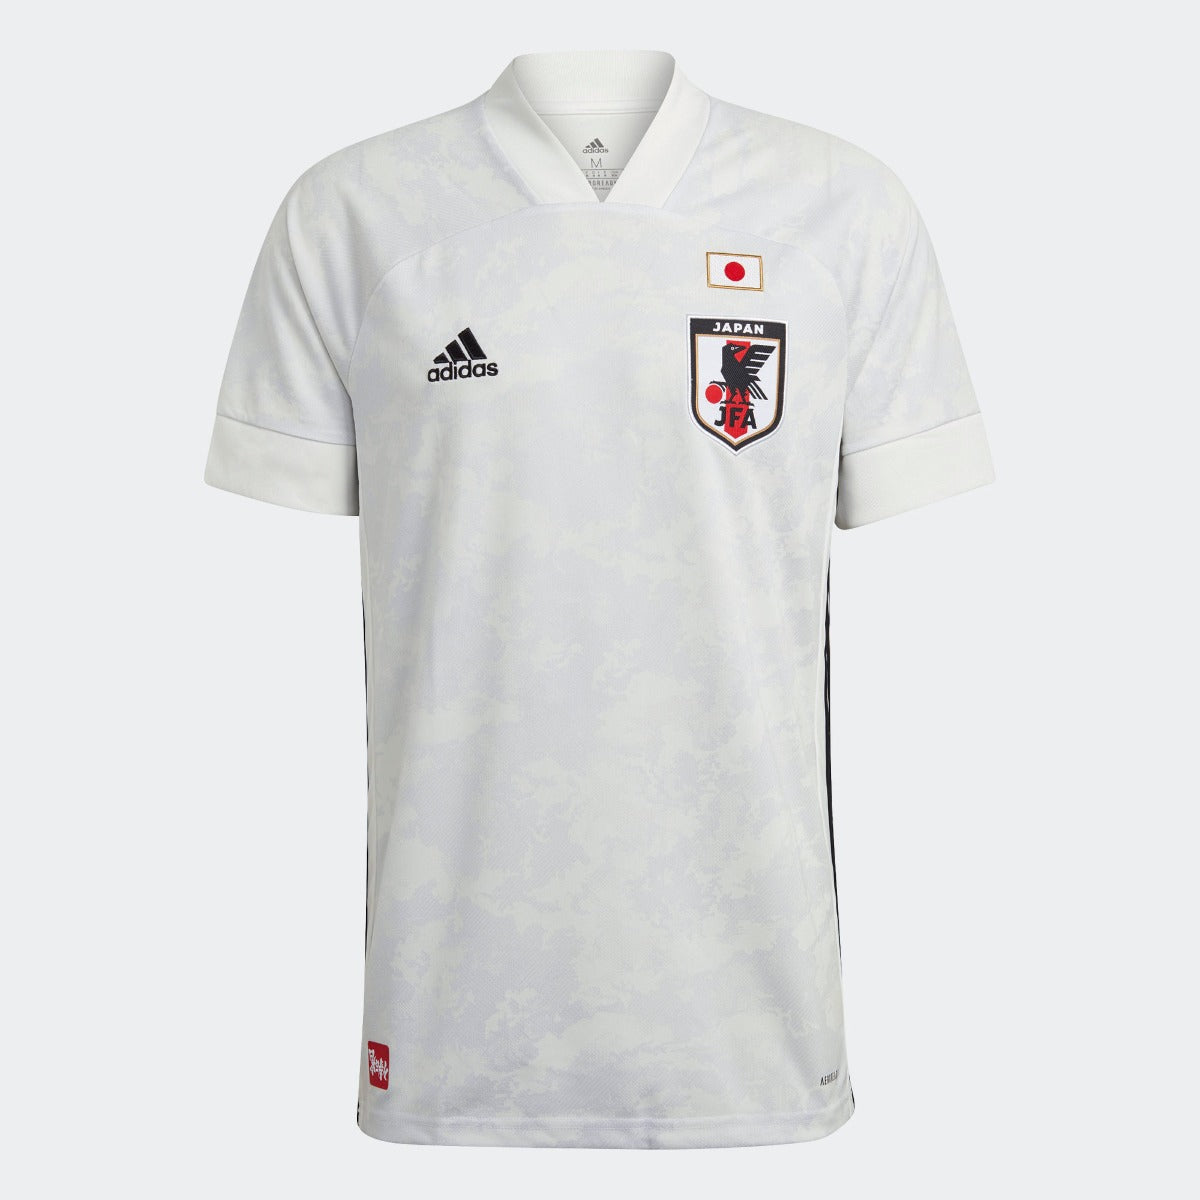 Japan football team jersey